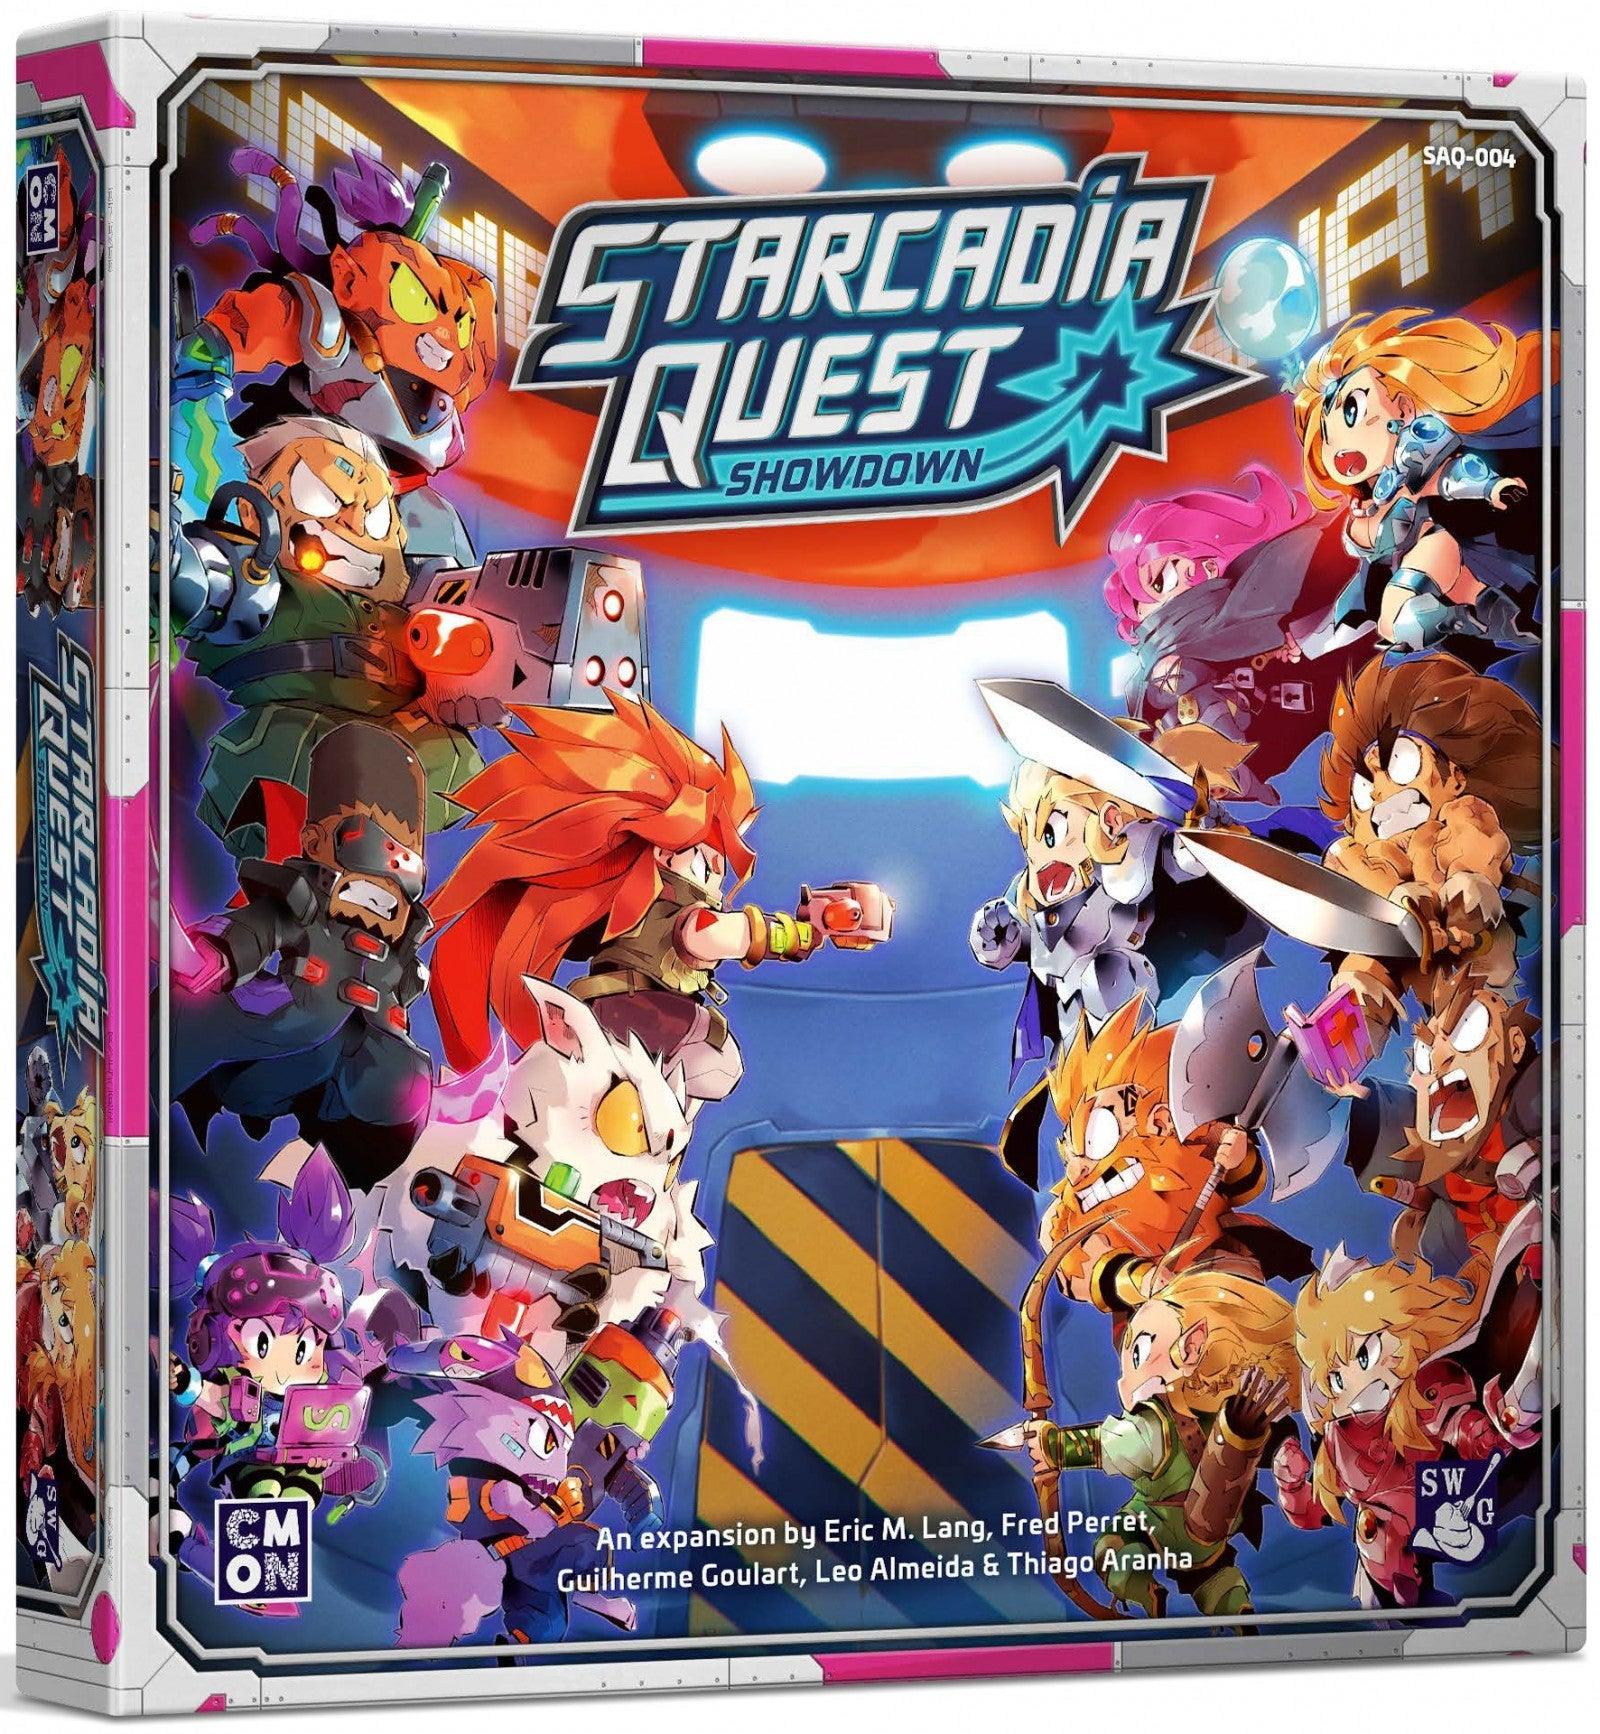 VR-77178 Starcadia Quest Showdown - CMON - Titan Pop Culture